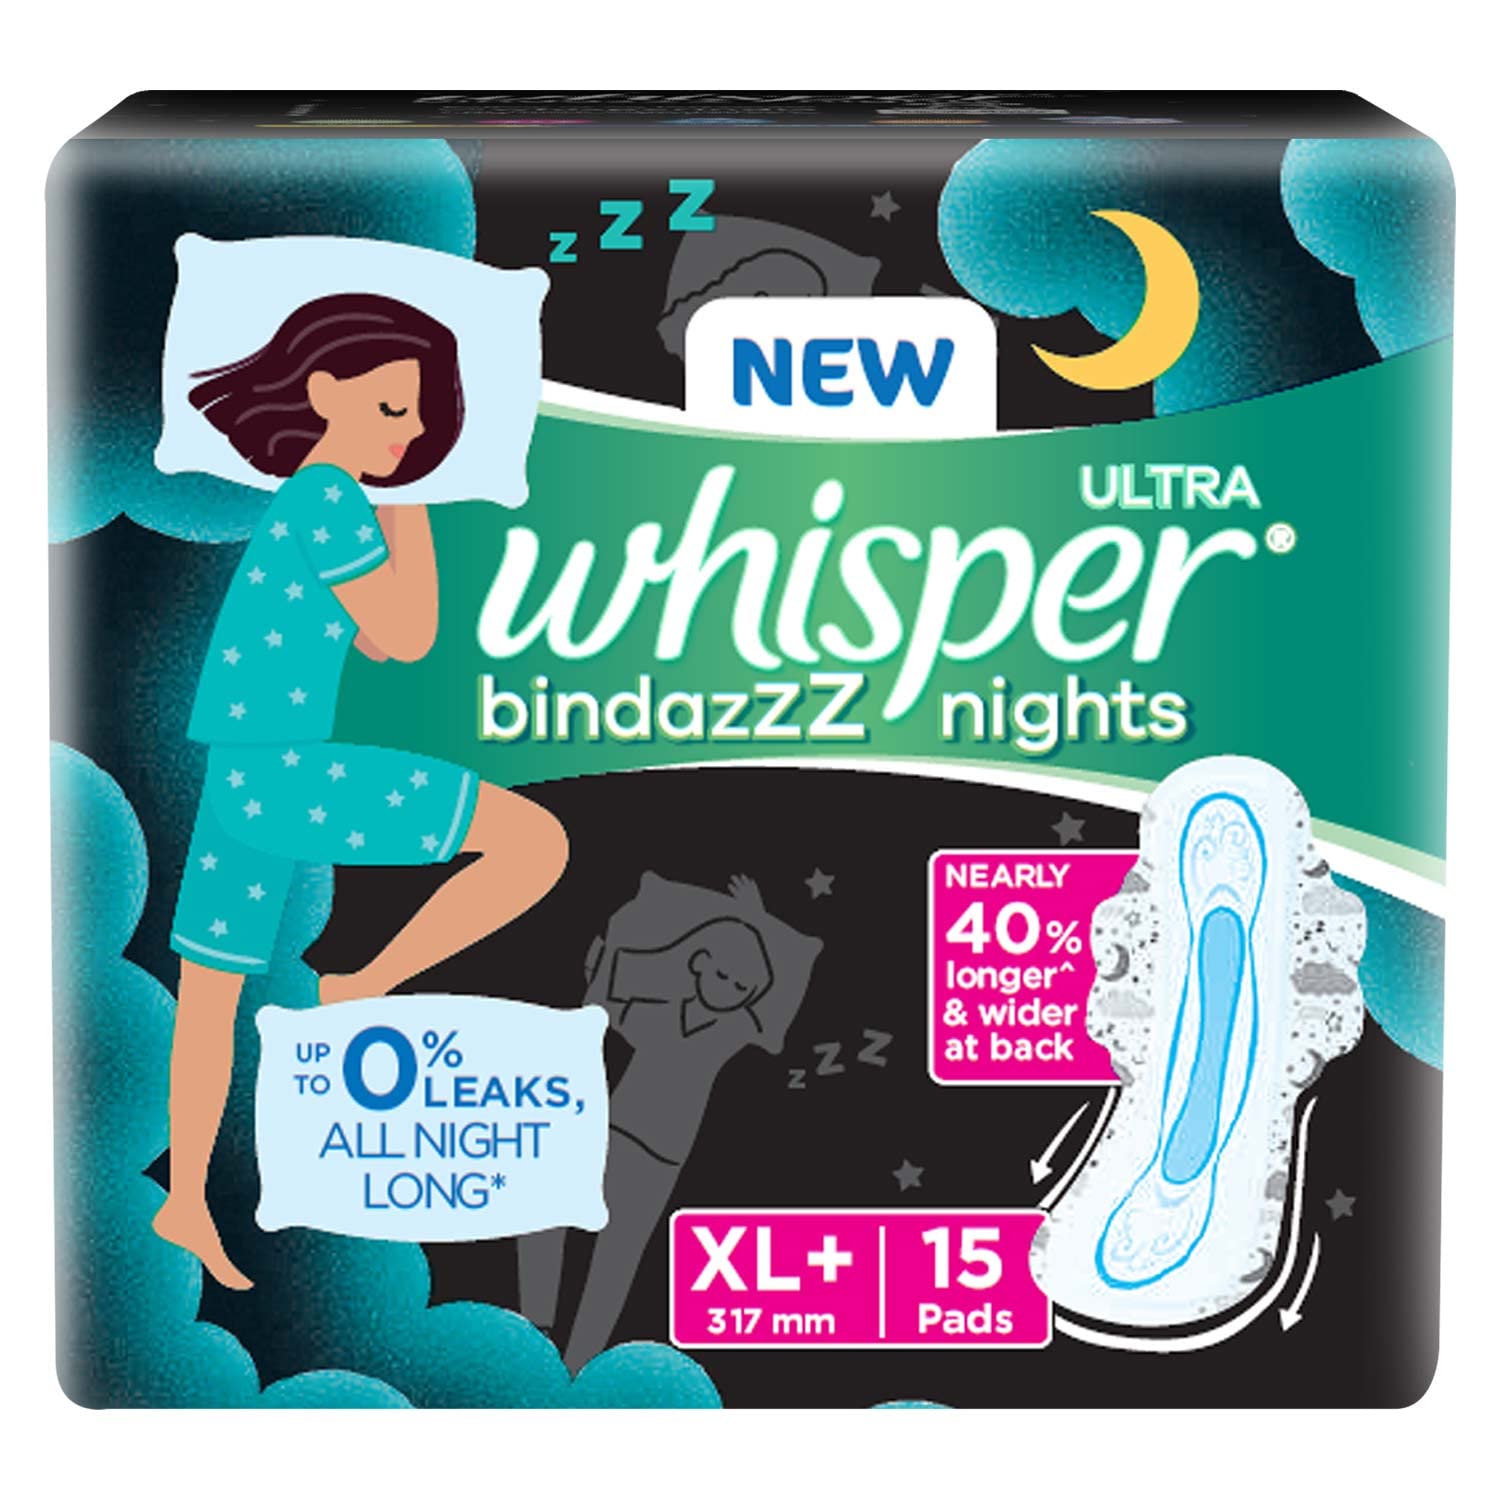 WHISPER ULTRA BINDAZZZ NIGHT XL+15